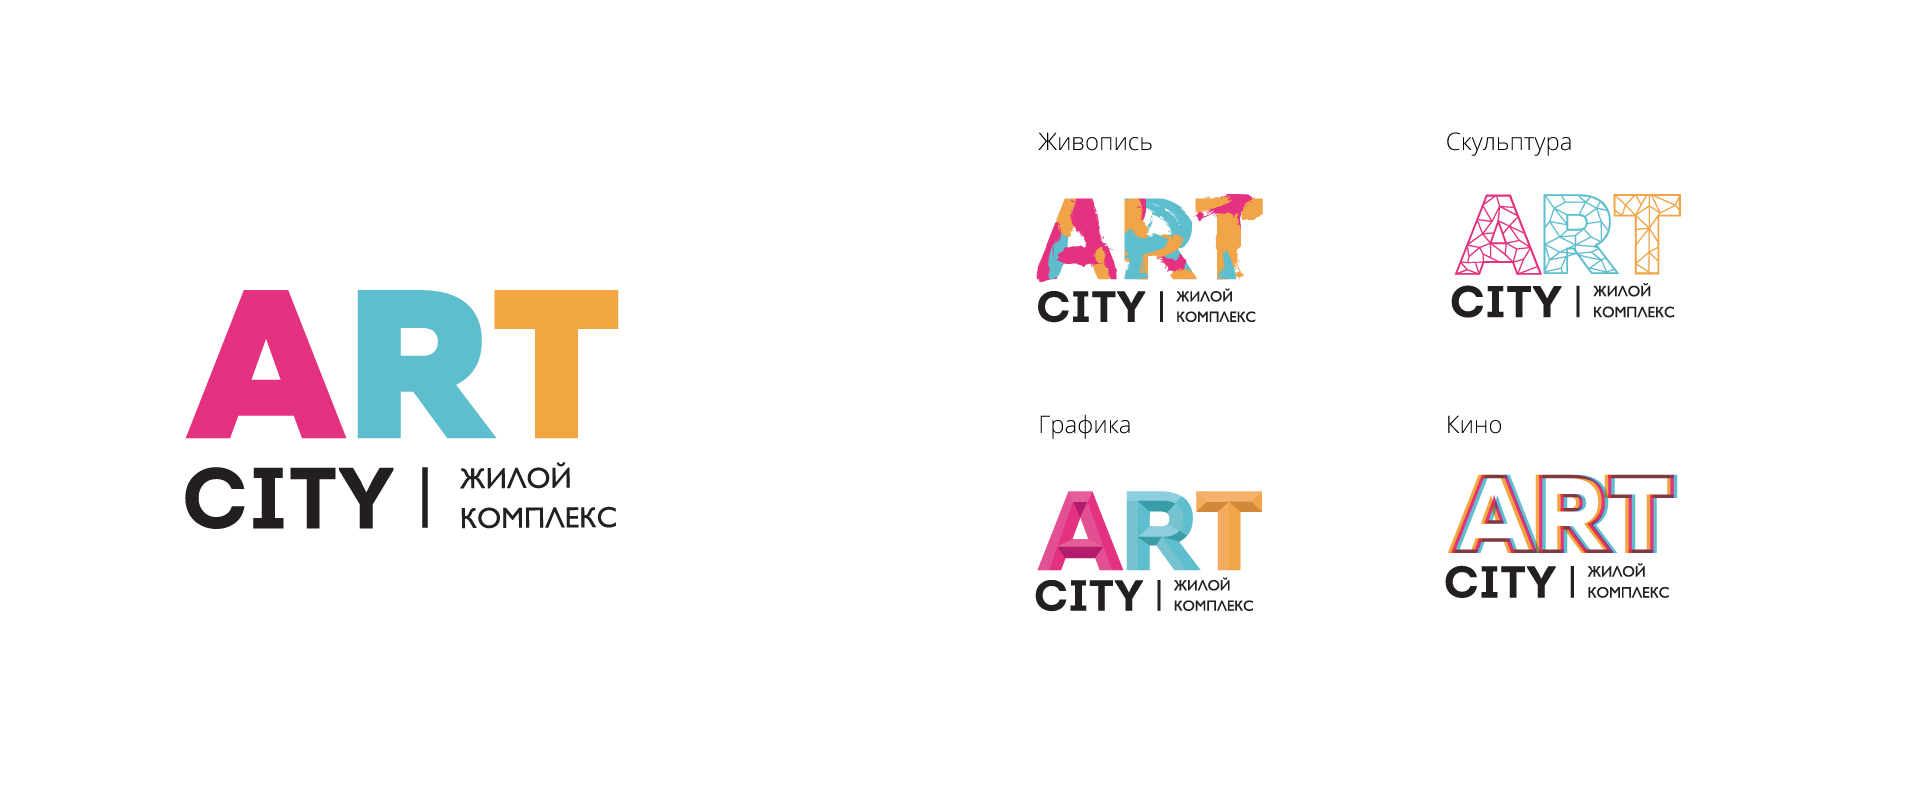 ART city  | Консалтинговое агентство GMK